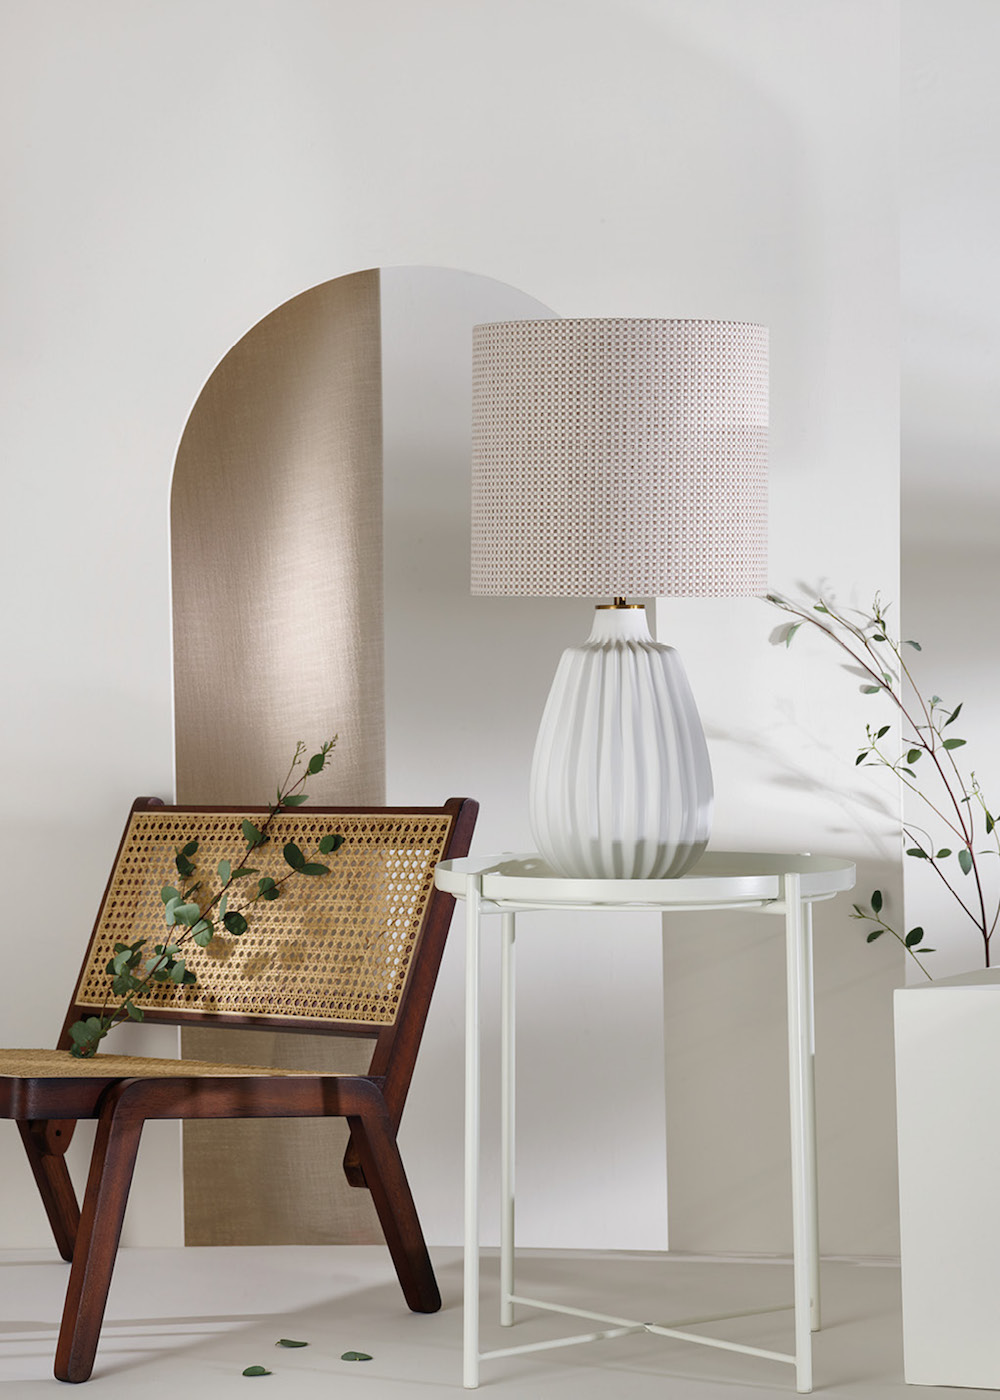 Image caption: Heathfield & Co's Elder Table Lamp